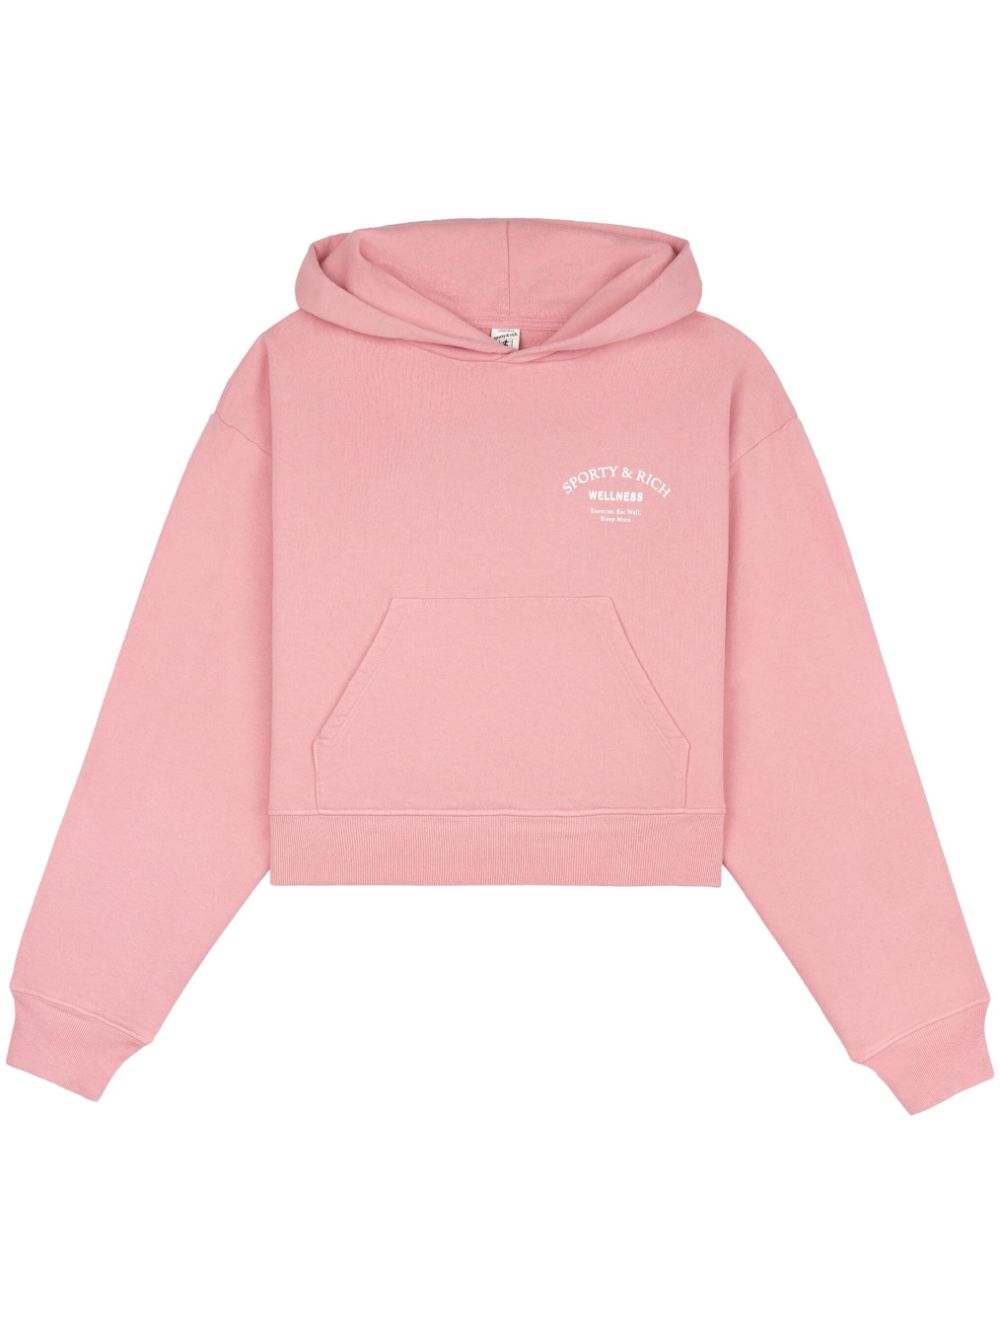 Sporty & Rich Wellness Studio cropped hoodie - Pink von Sporty & Rich